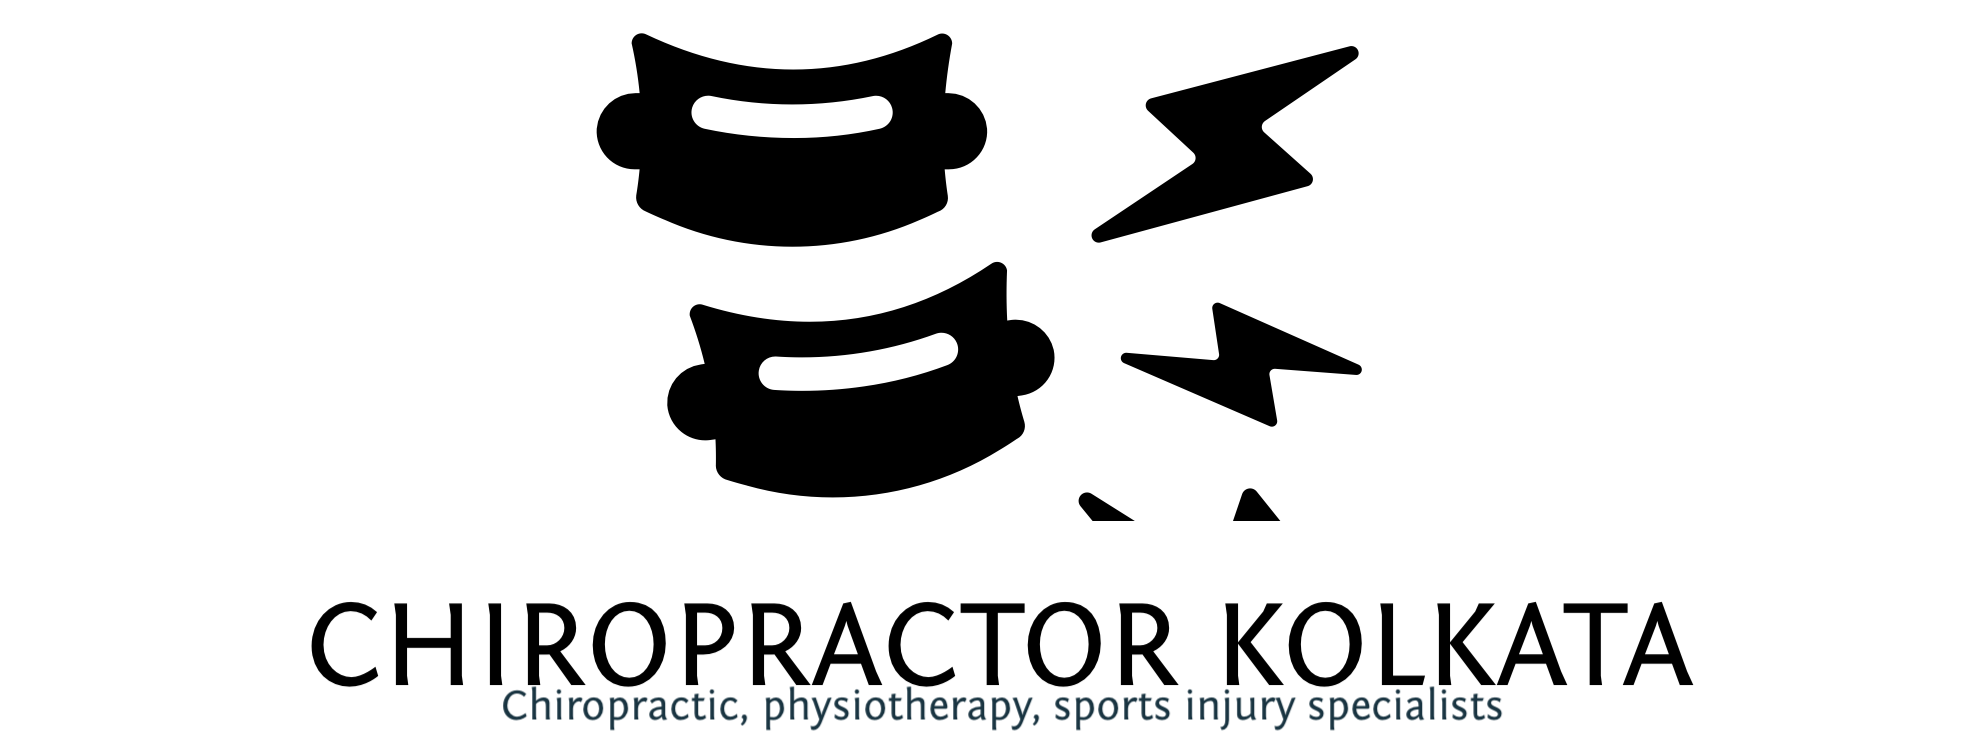 chiropractor in kolkata logo 1